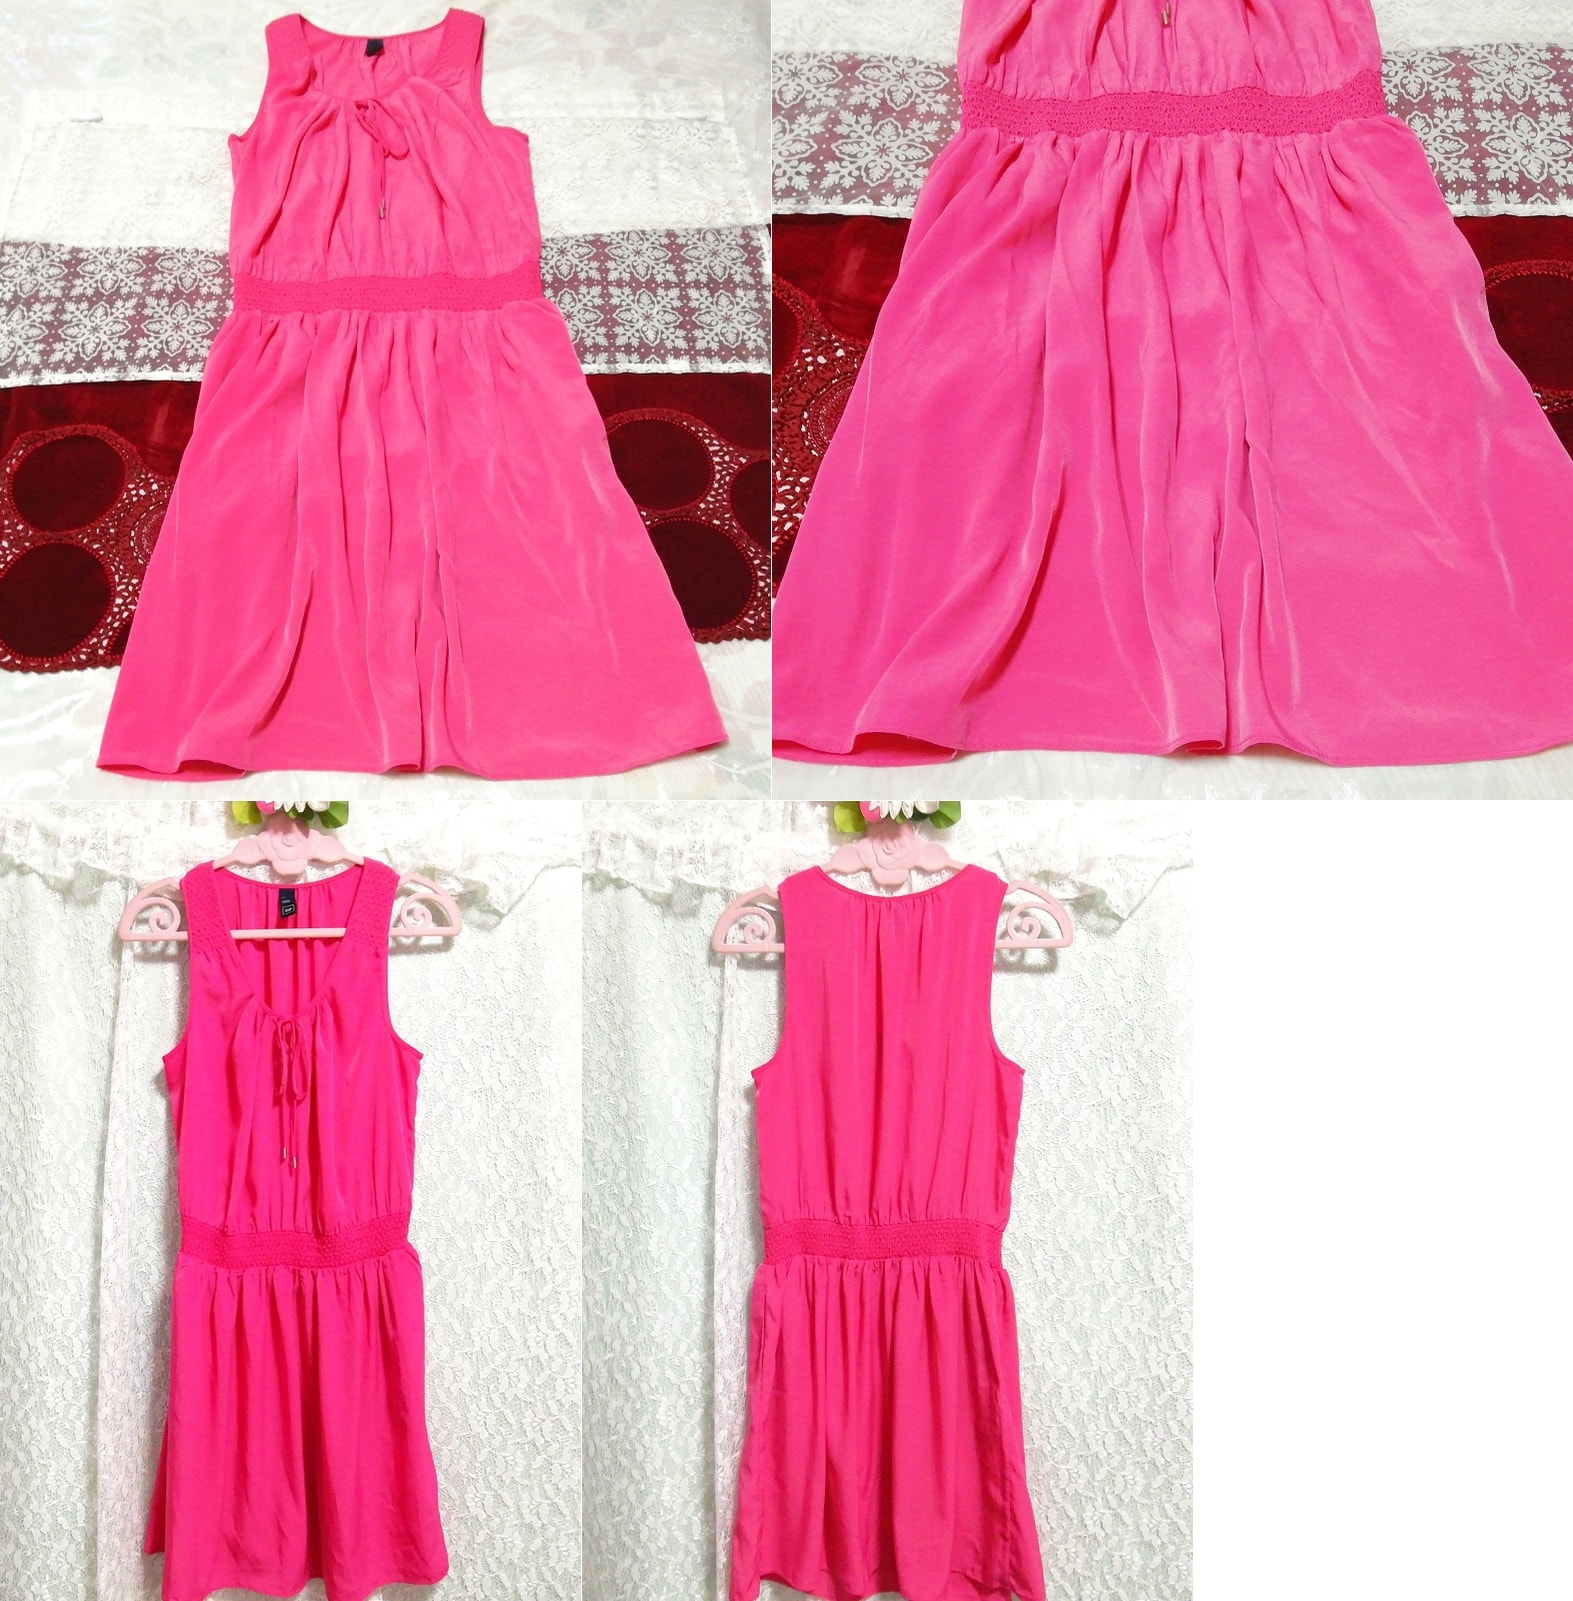 फ्लोरोसेंट गुलाबी शिफॉन स्लीवलेस रोबे नाइटगाउन हाफ ड्रेस, घुटनों तक लंबी स्कर्ट, मी आकार